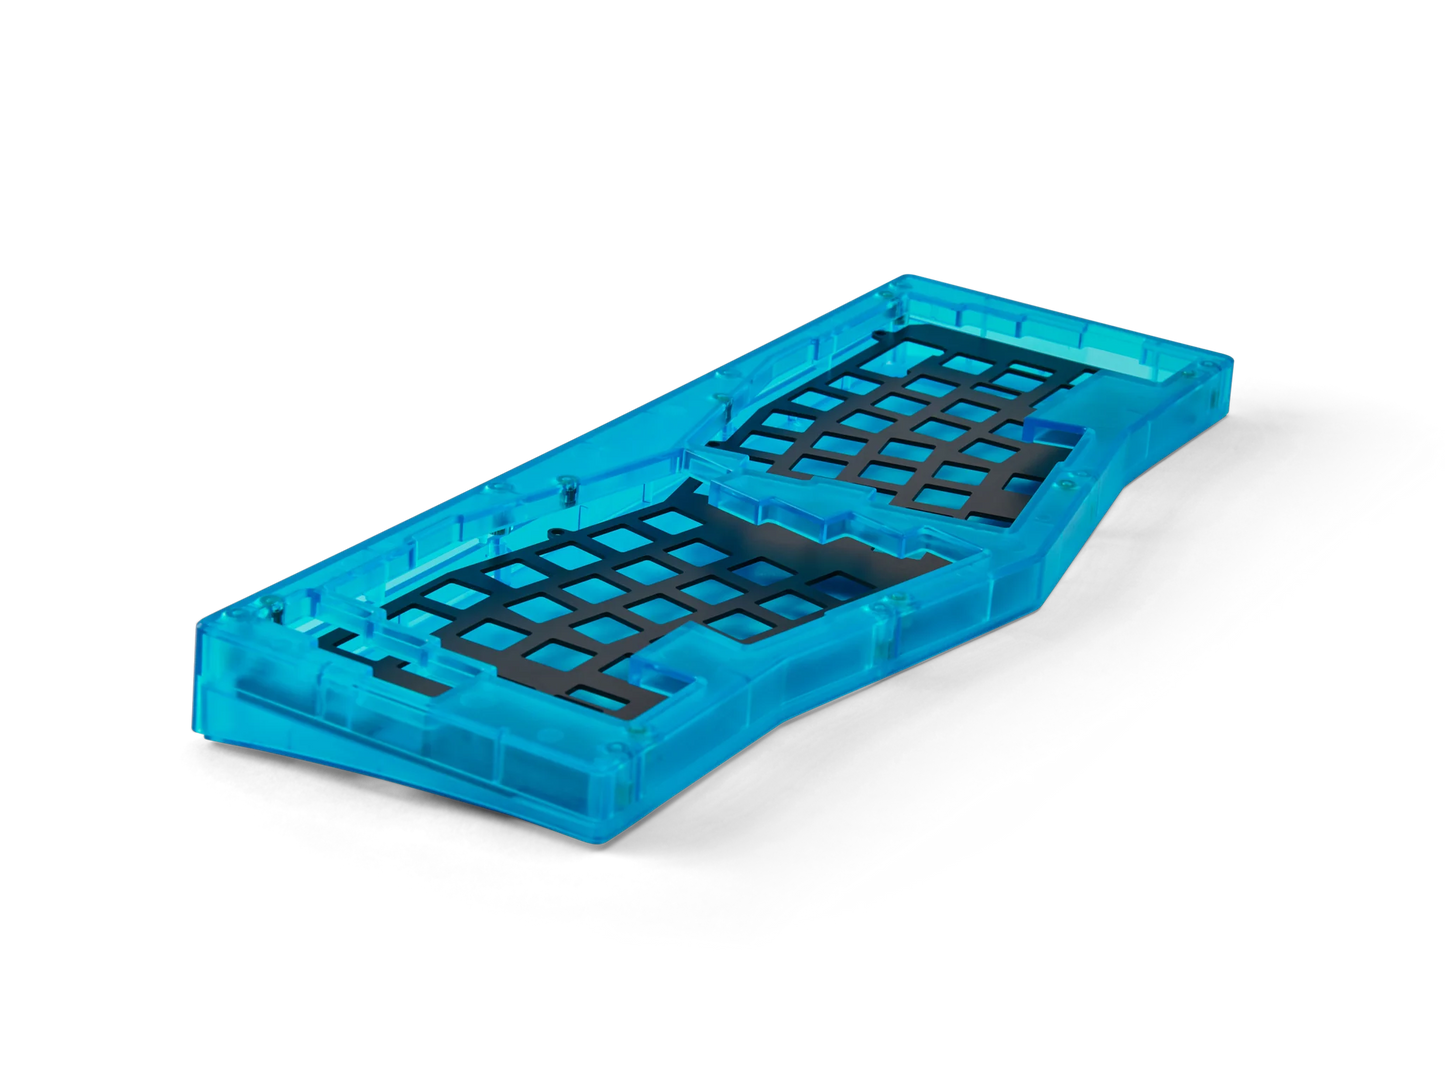 Praxis IM Keyboard (Full Kit - Case, PCB, Plate + Stabs)